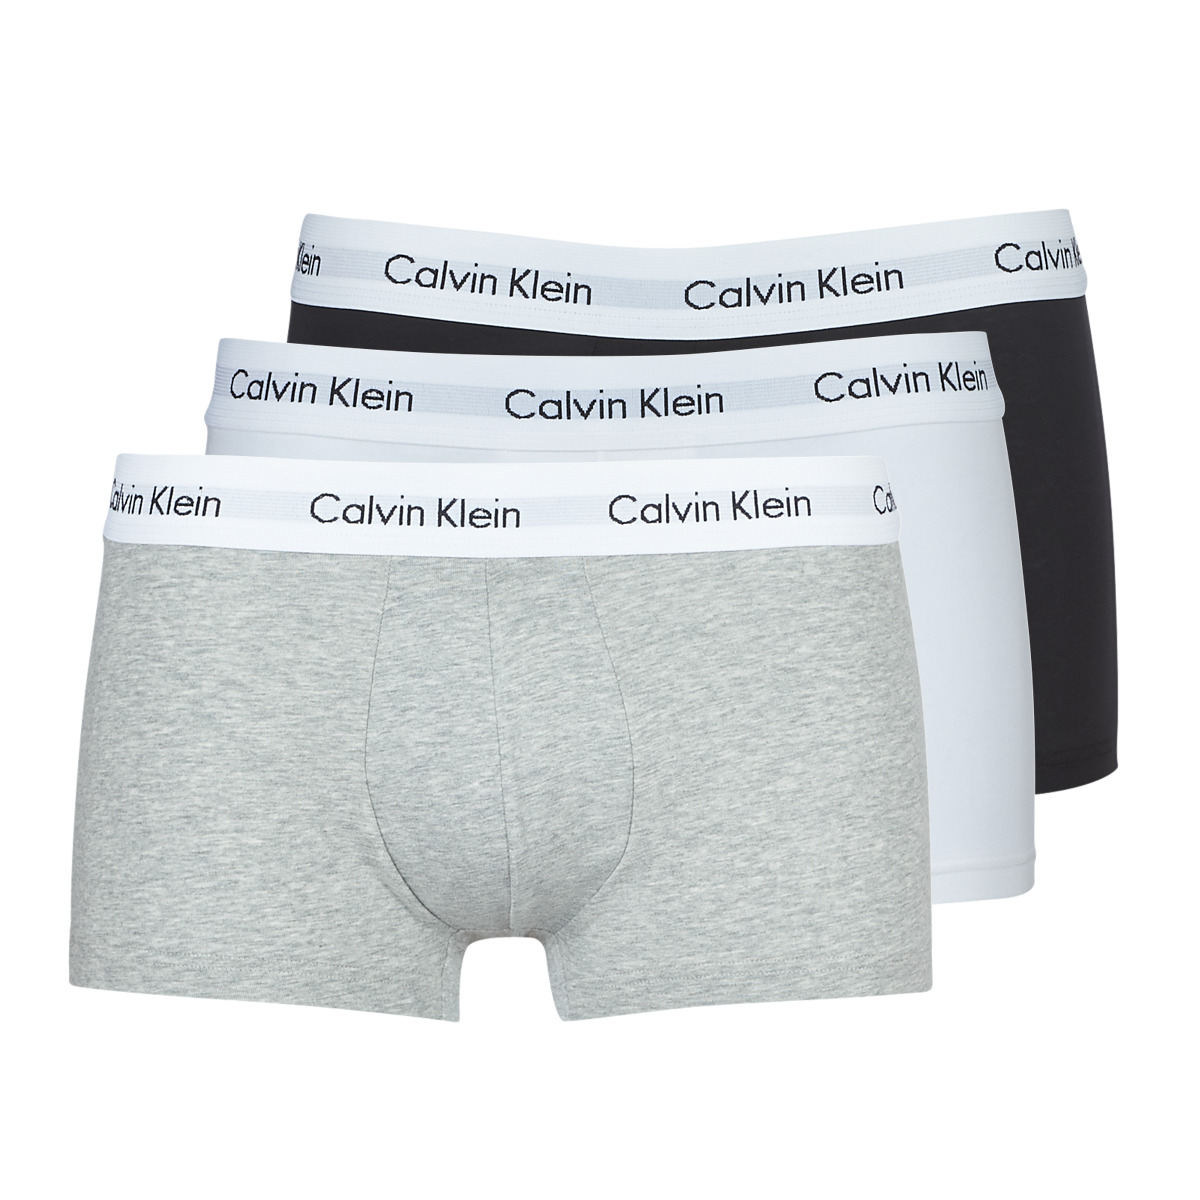 Calvin Klein Jeans COTTON STRECH LOW RISE TRUNK X 3 Black / White / Grey /  Mottled - Fast delivery | Spartoo Europe ! - Underwear Boxer shorts Men  47,00 €